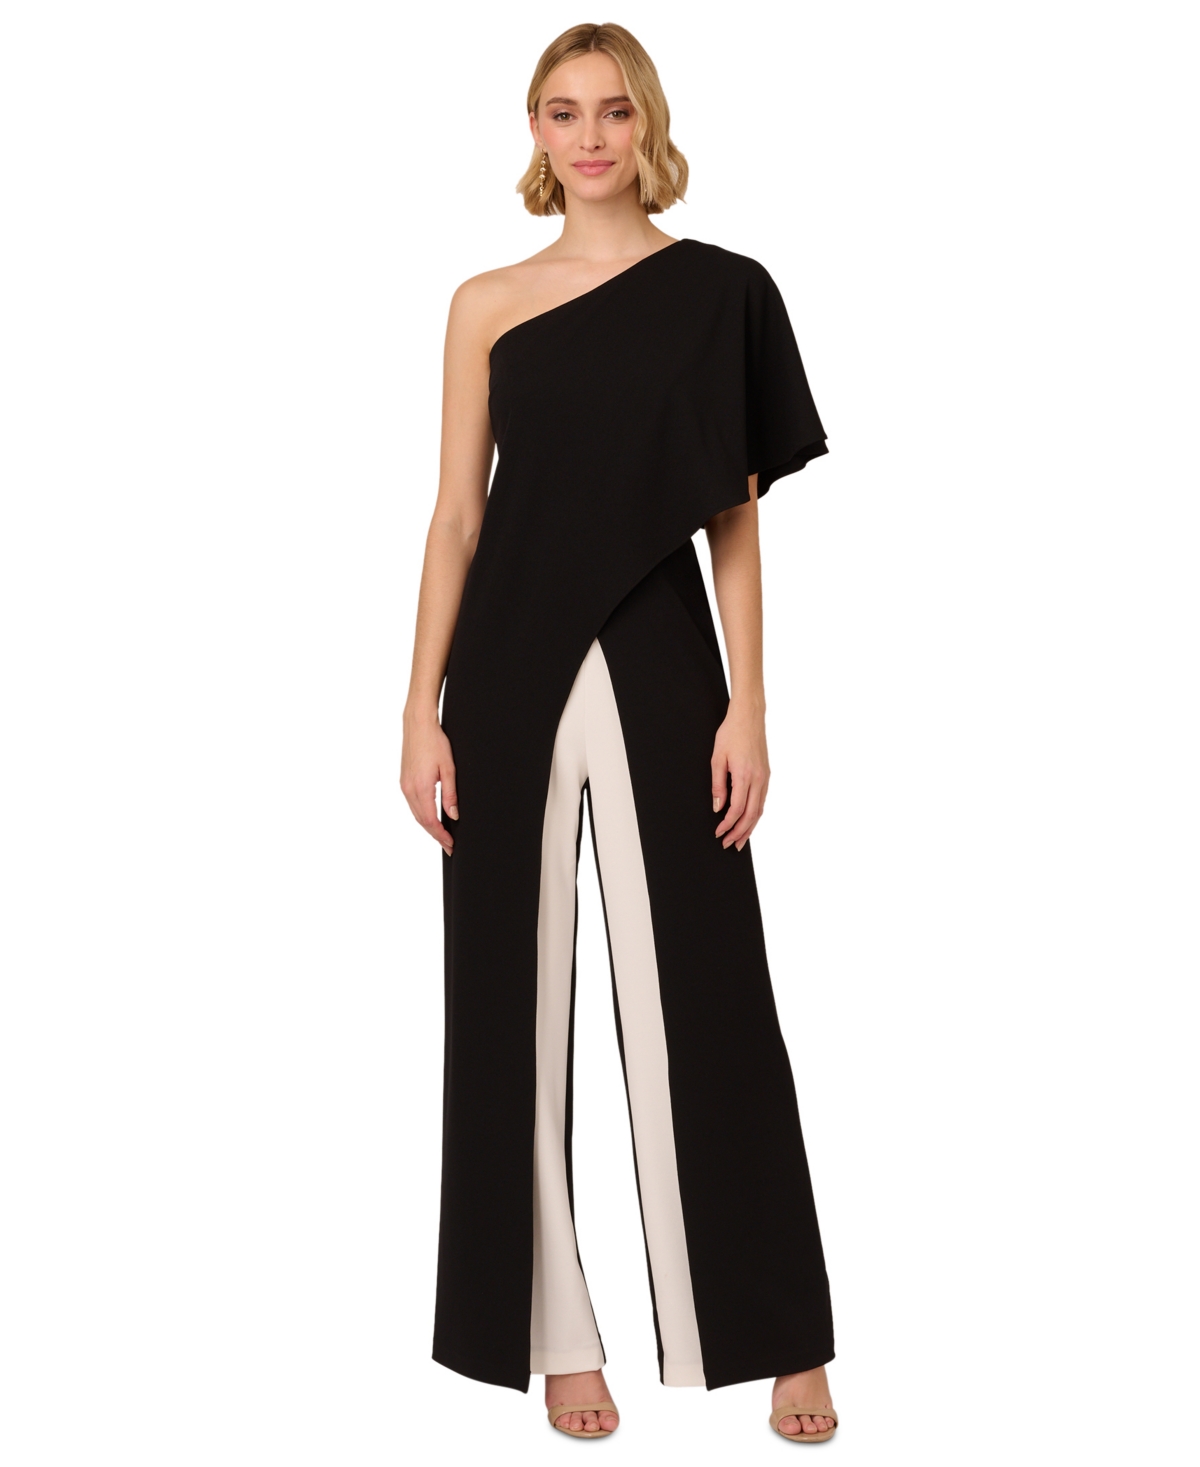 Women's Colorblocked Overlay Jumpsuit - Black Ivory